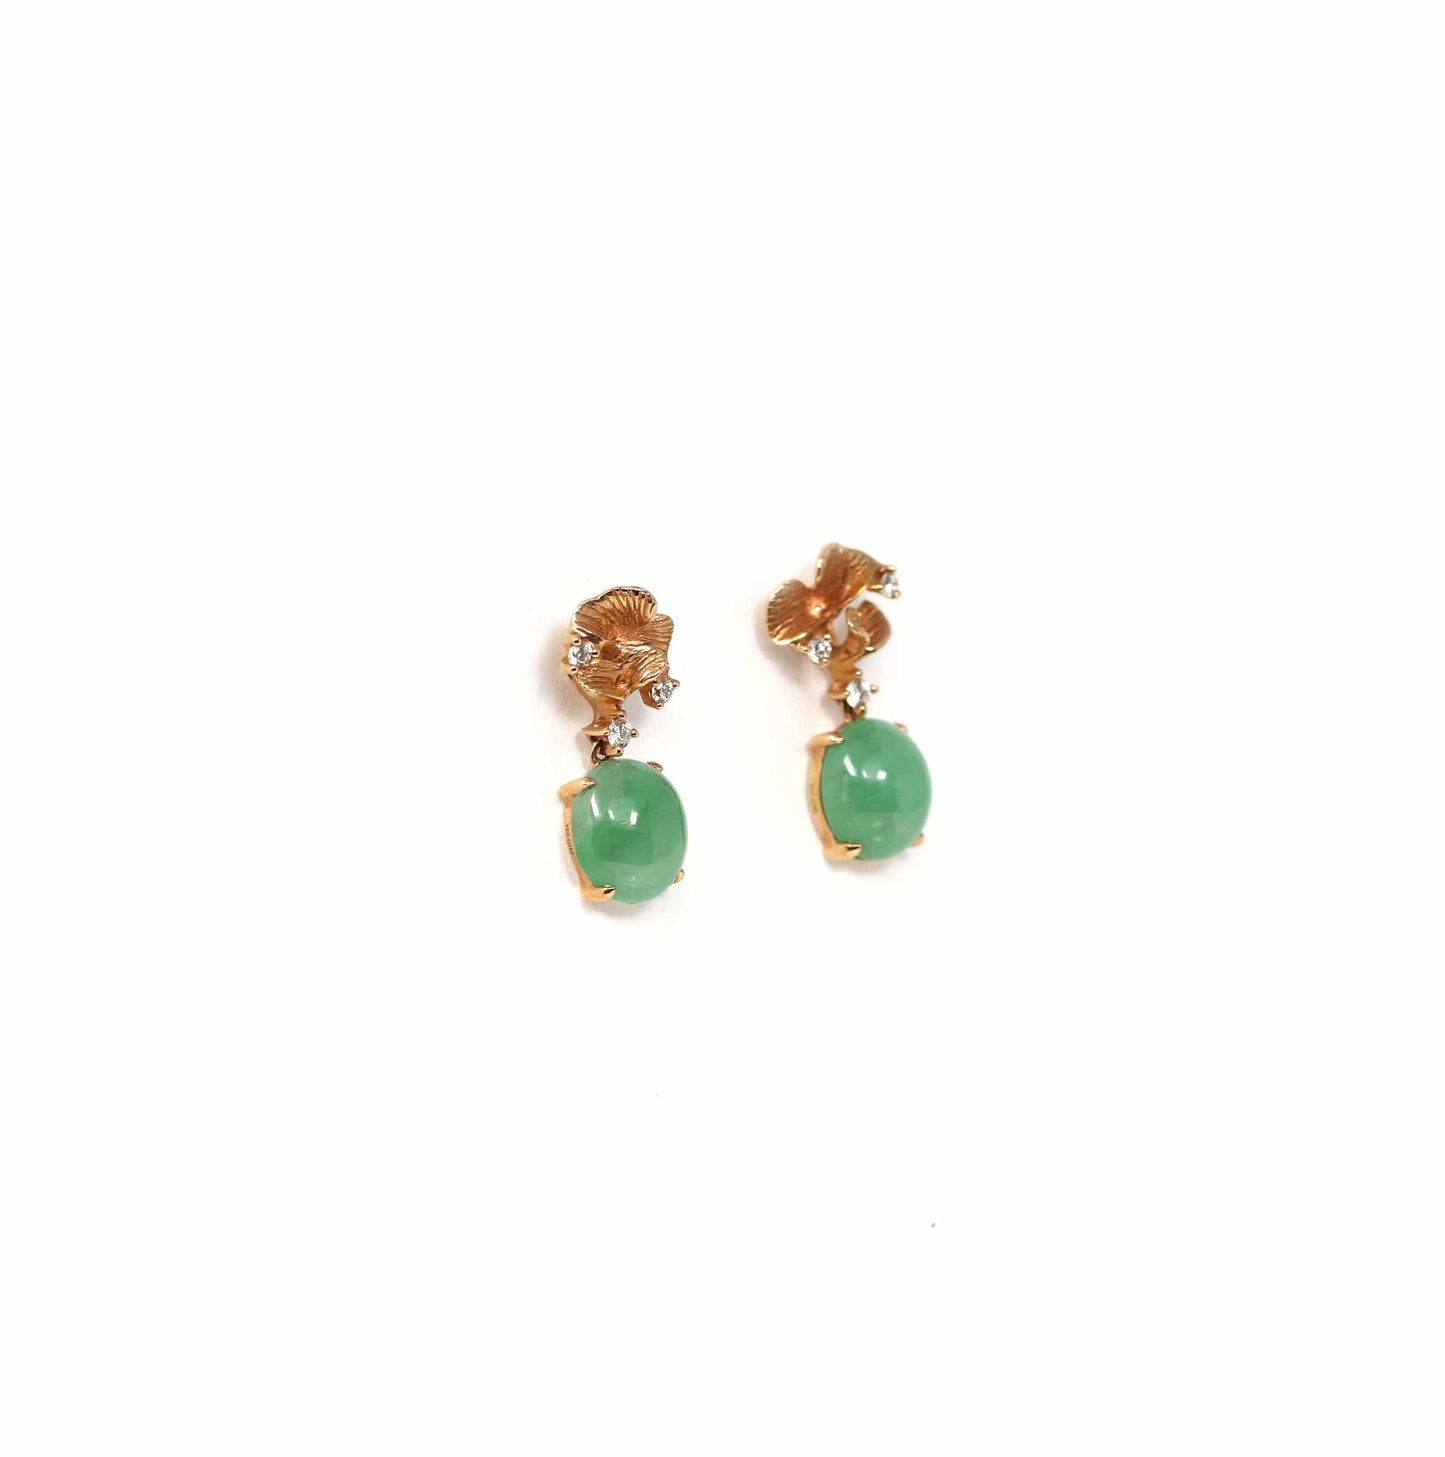 RealJade® Co. Gold Jade Earrings  18K Rose Gold "Apricot Blossom" Green Jadeite Jade Dangle Stud Earrings